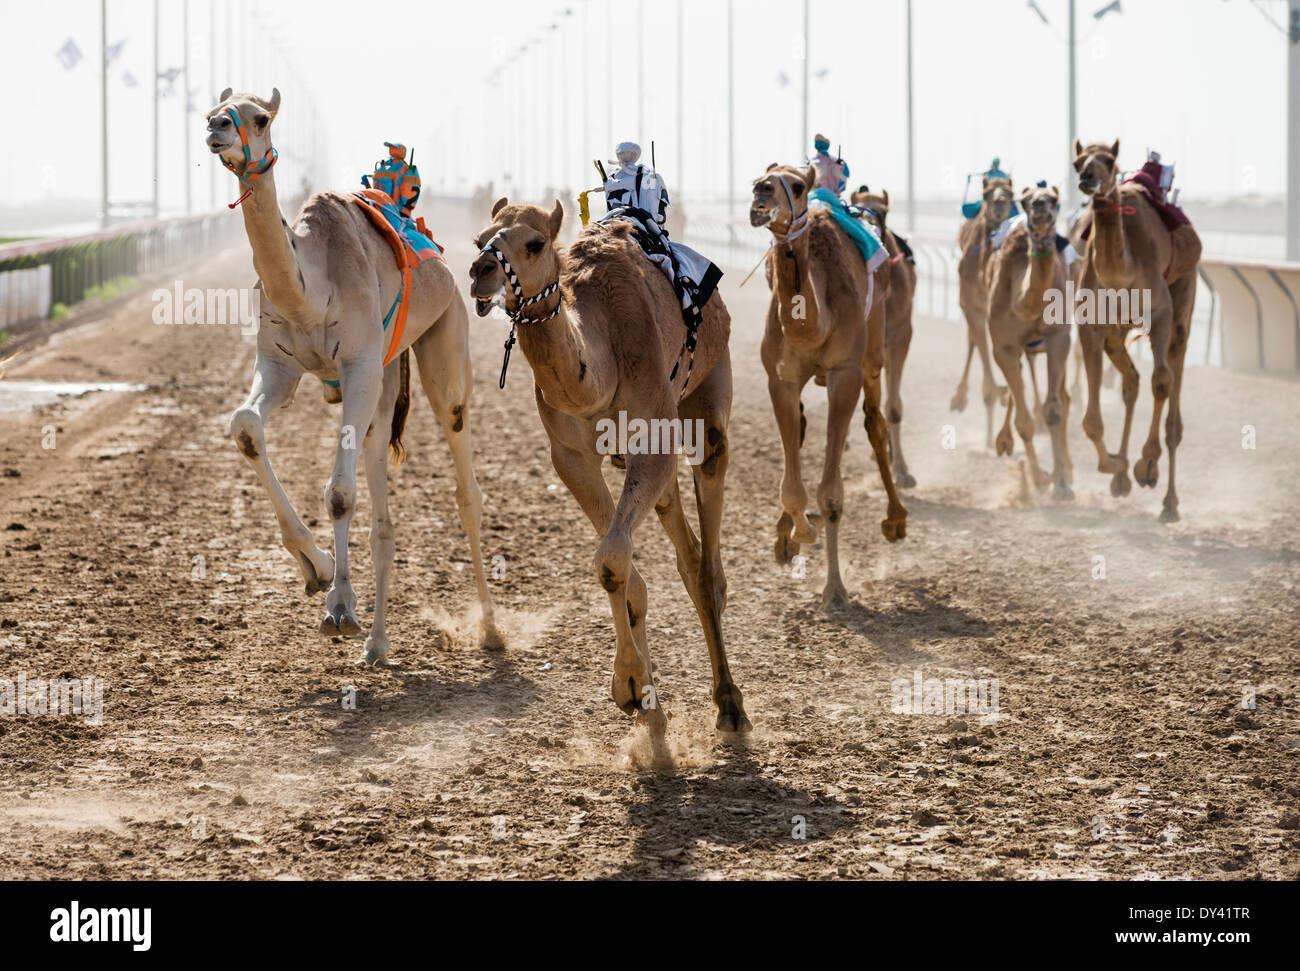 Corse di cammelli al camel racing festival al cammello Marmoum racing racetrack in Dubai Emirati Arabi Uniti Foto Stock